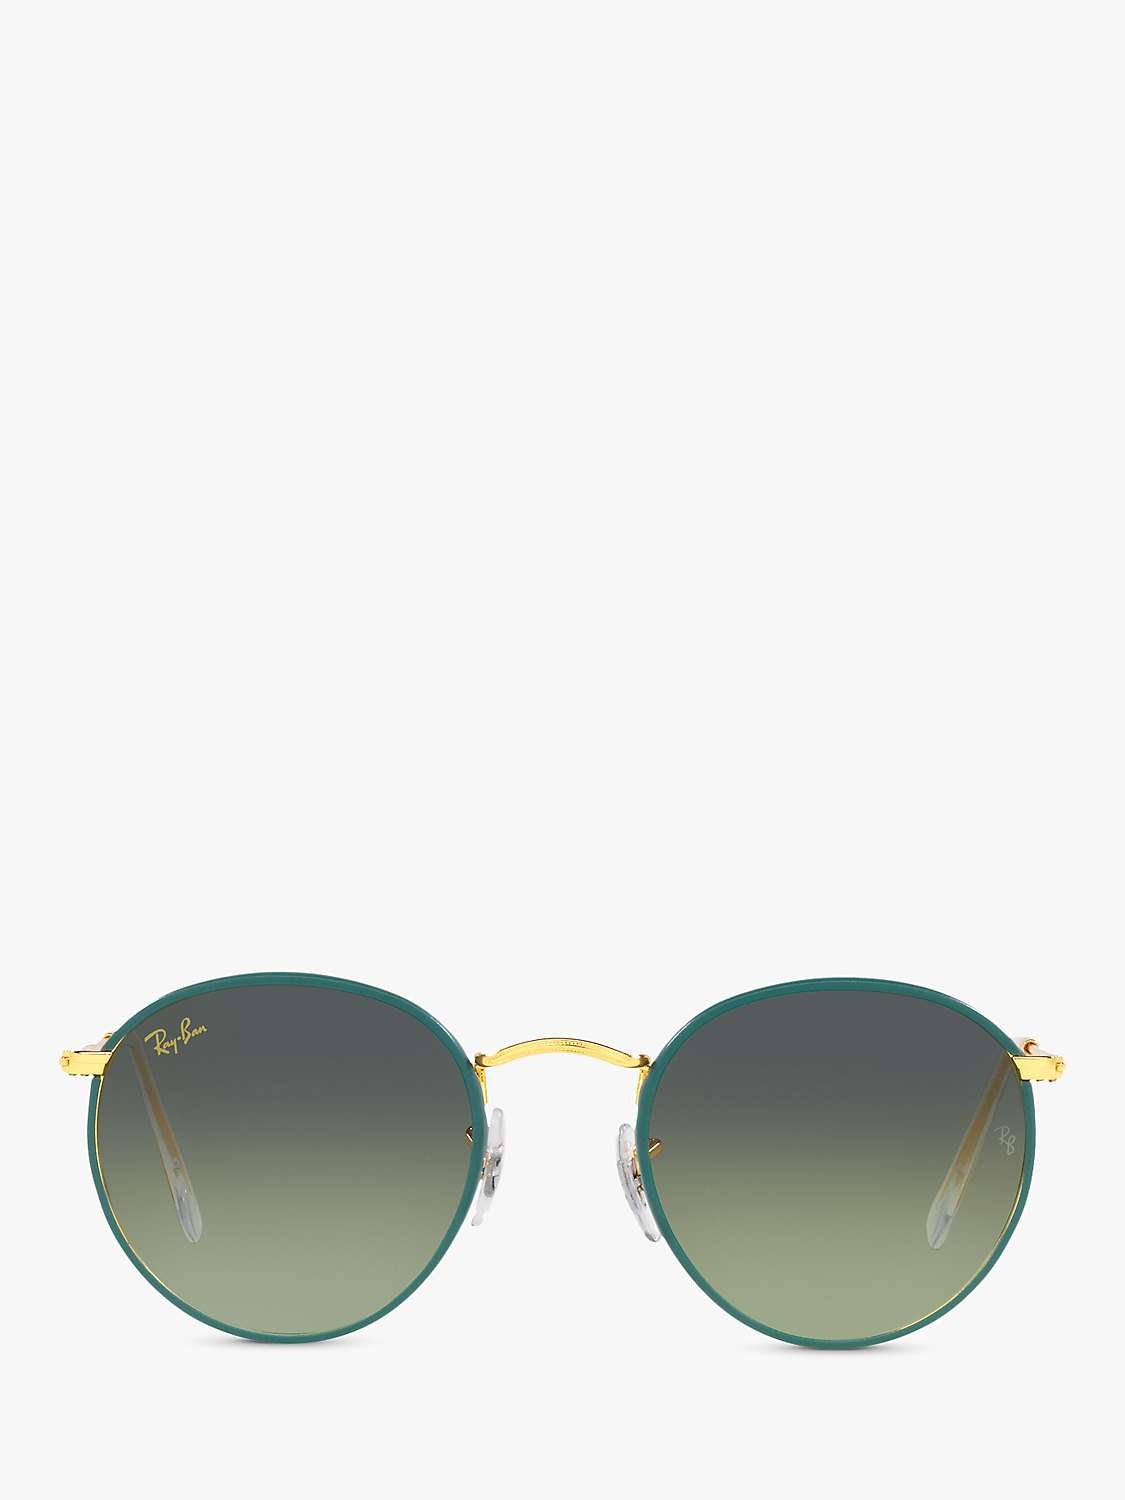 Buy Ray-Ban RB2283 Men's Phantos Sunglasses, Petroleum on Legend Gold Online at johnlewis.com